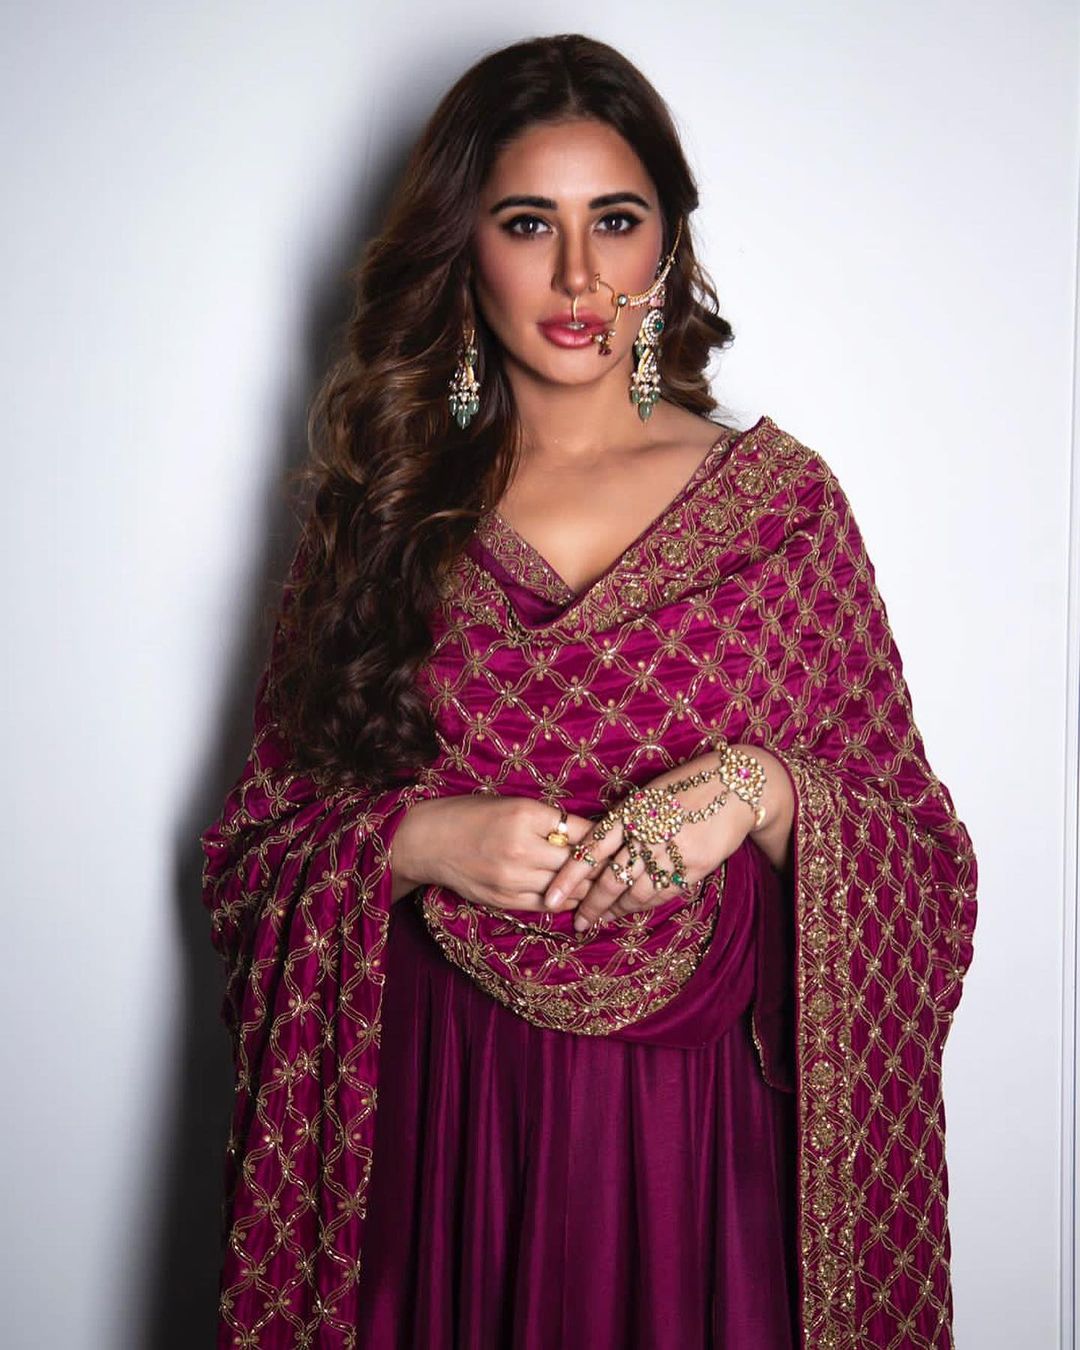 Nargis Fakhri looks elegant in the purple kurta and dupatta